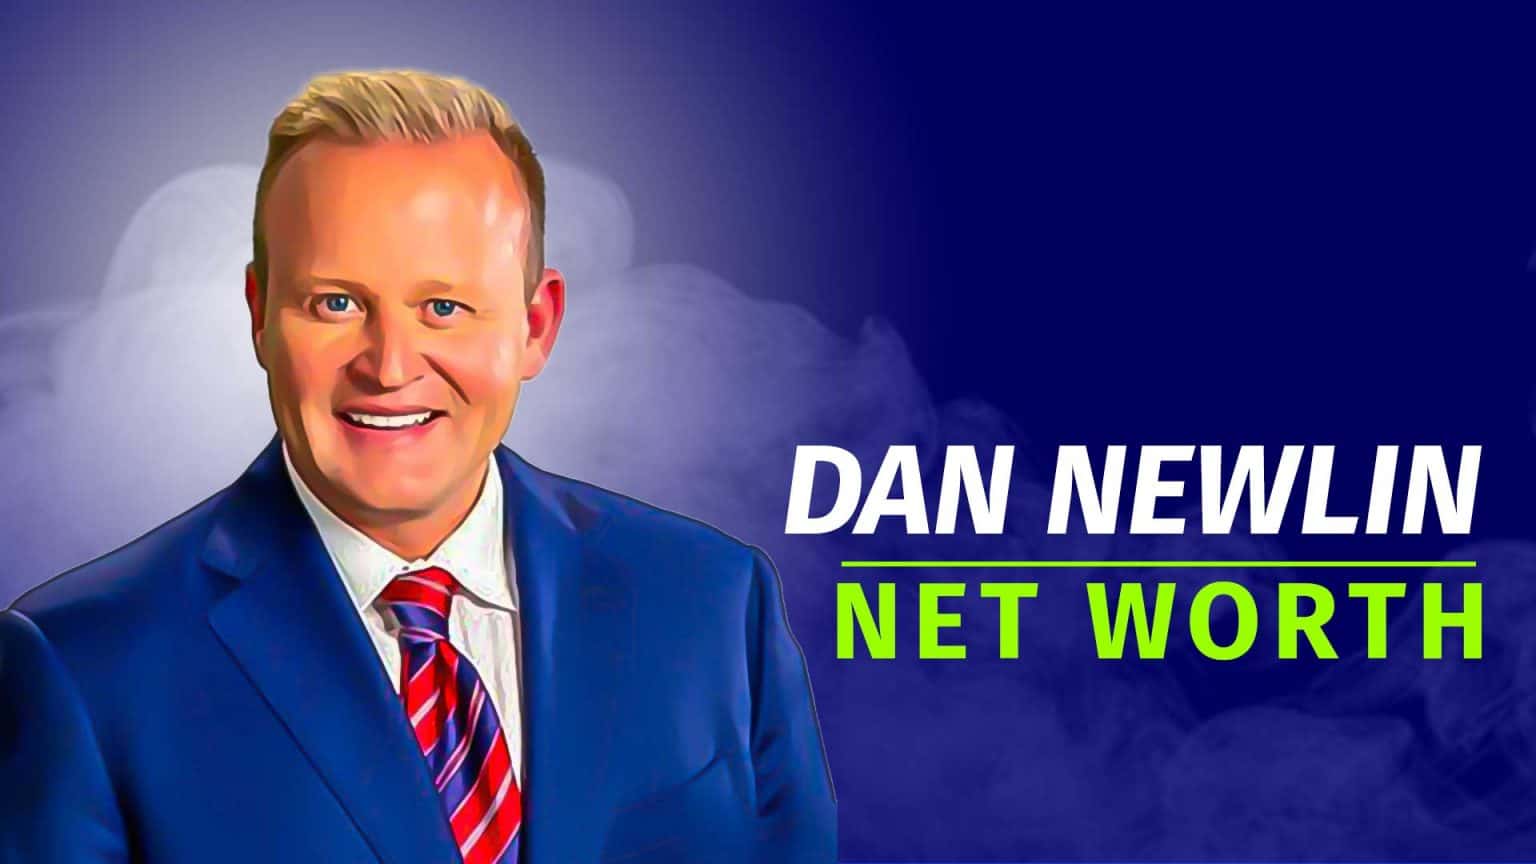 Dan Newlin Net Worth – How Much Money Do You Make?